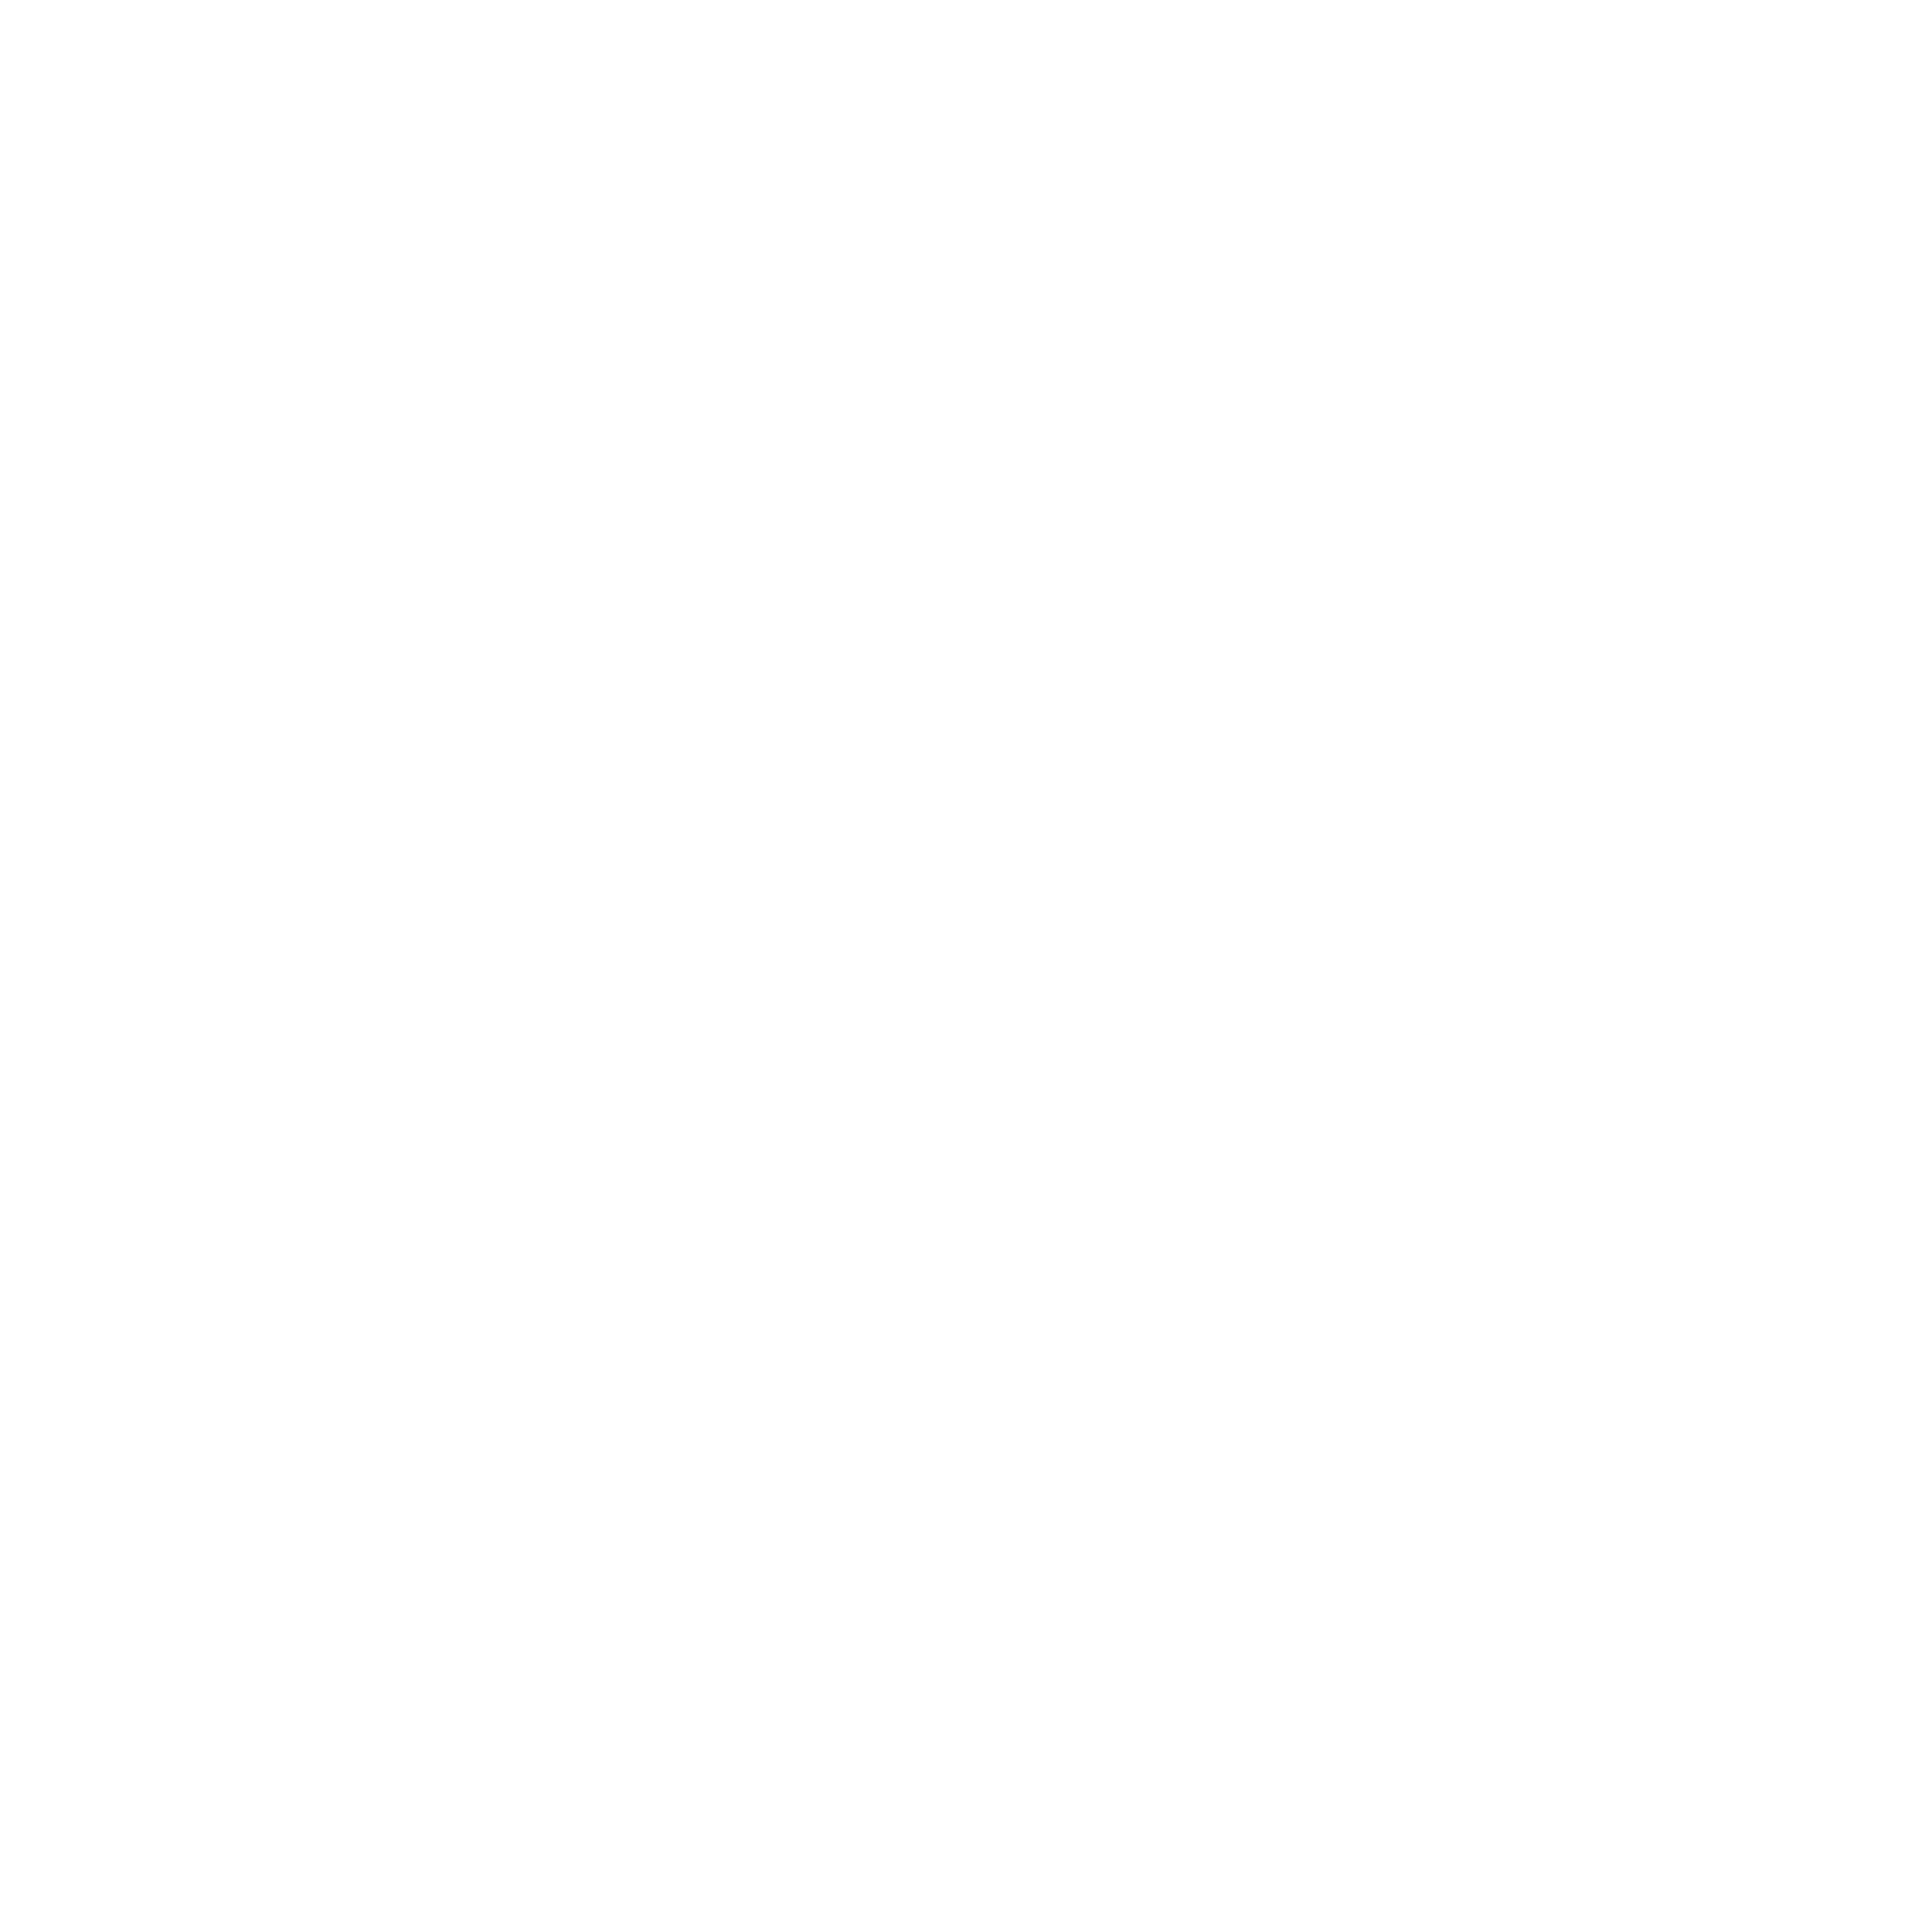 Flame Launch Logo